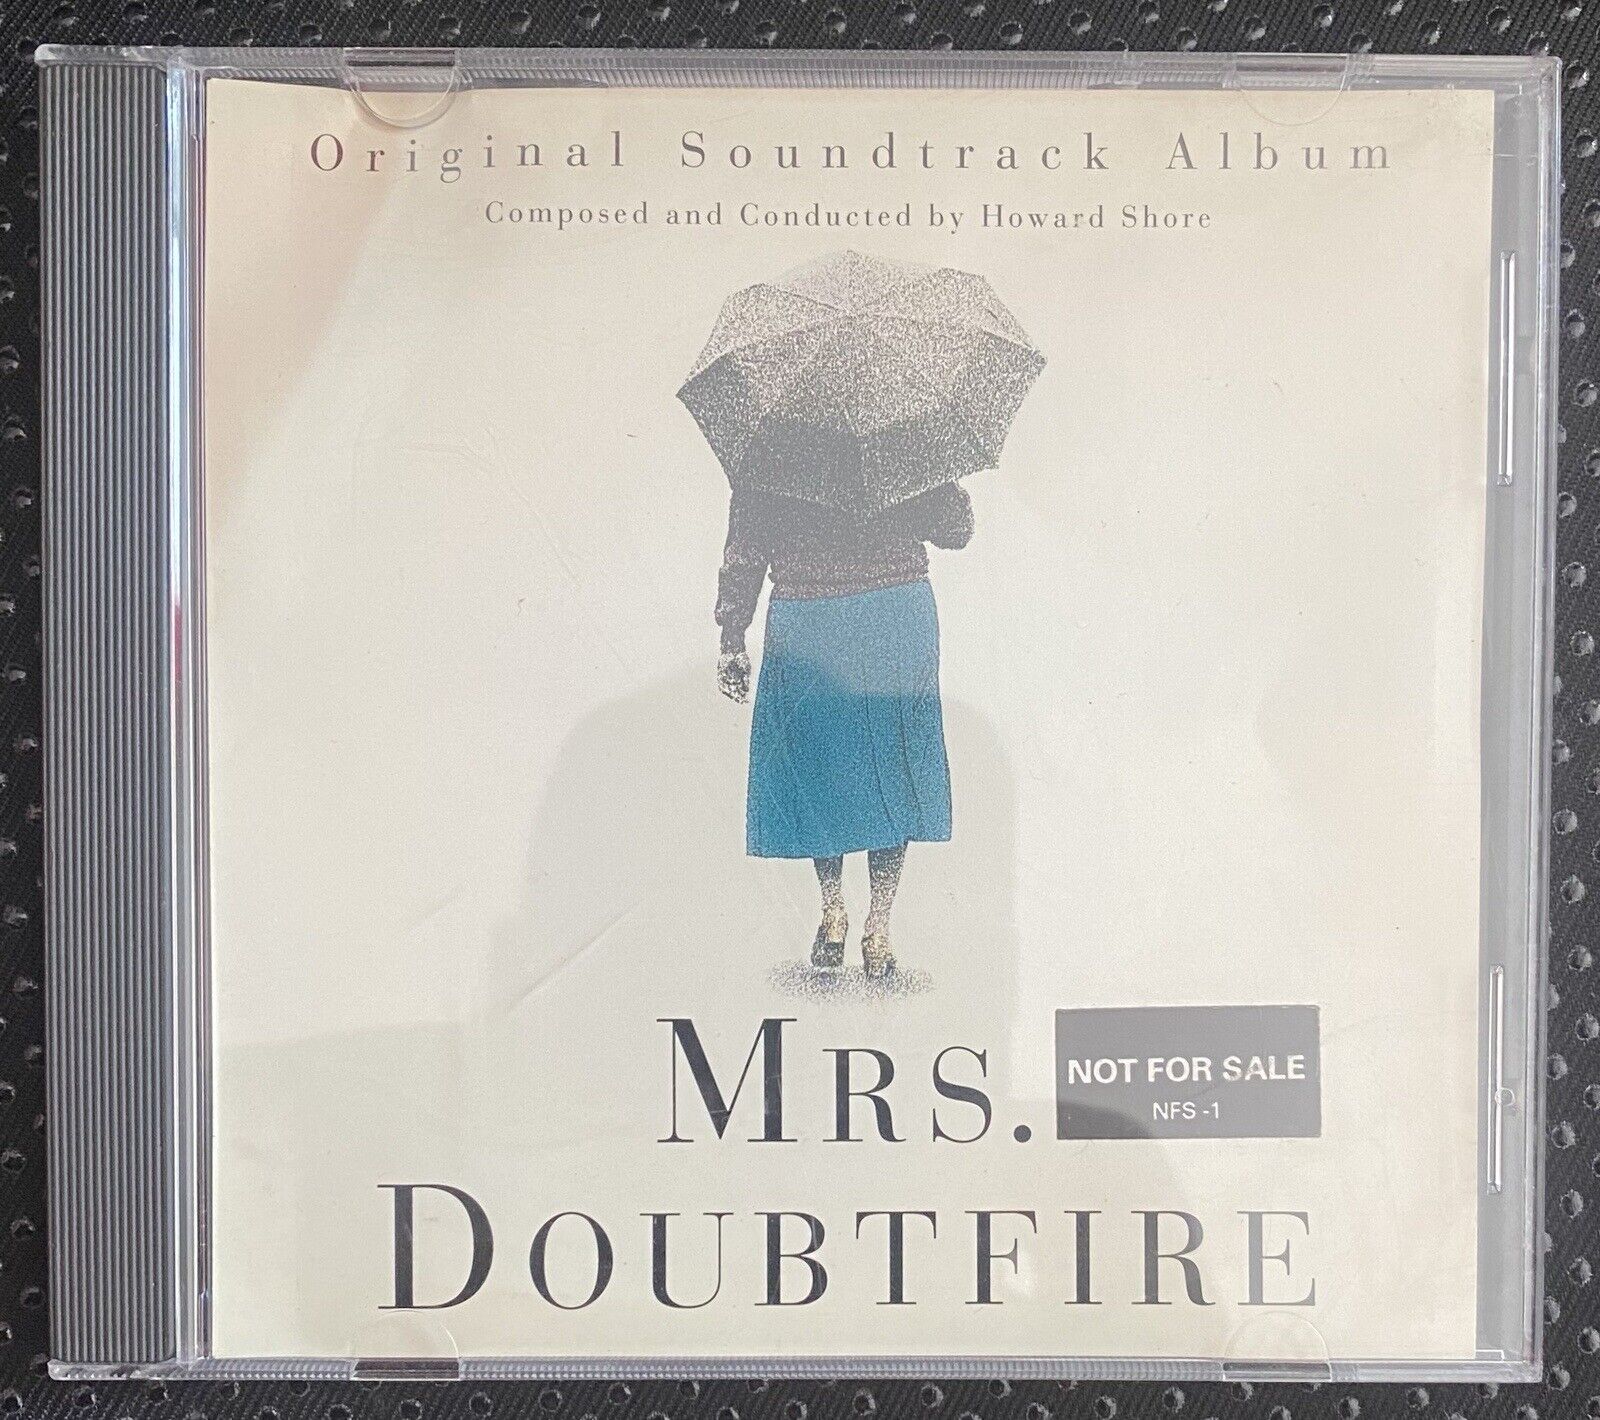 Mrs. Doubtfire NFS-1 Not For Sale Original Soundtrack Album Movie CD Rare OOP